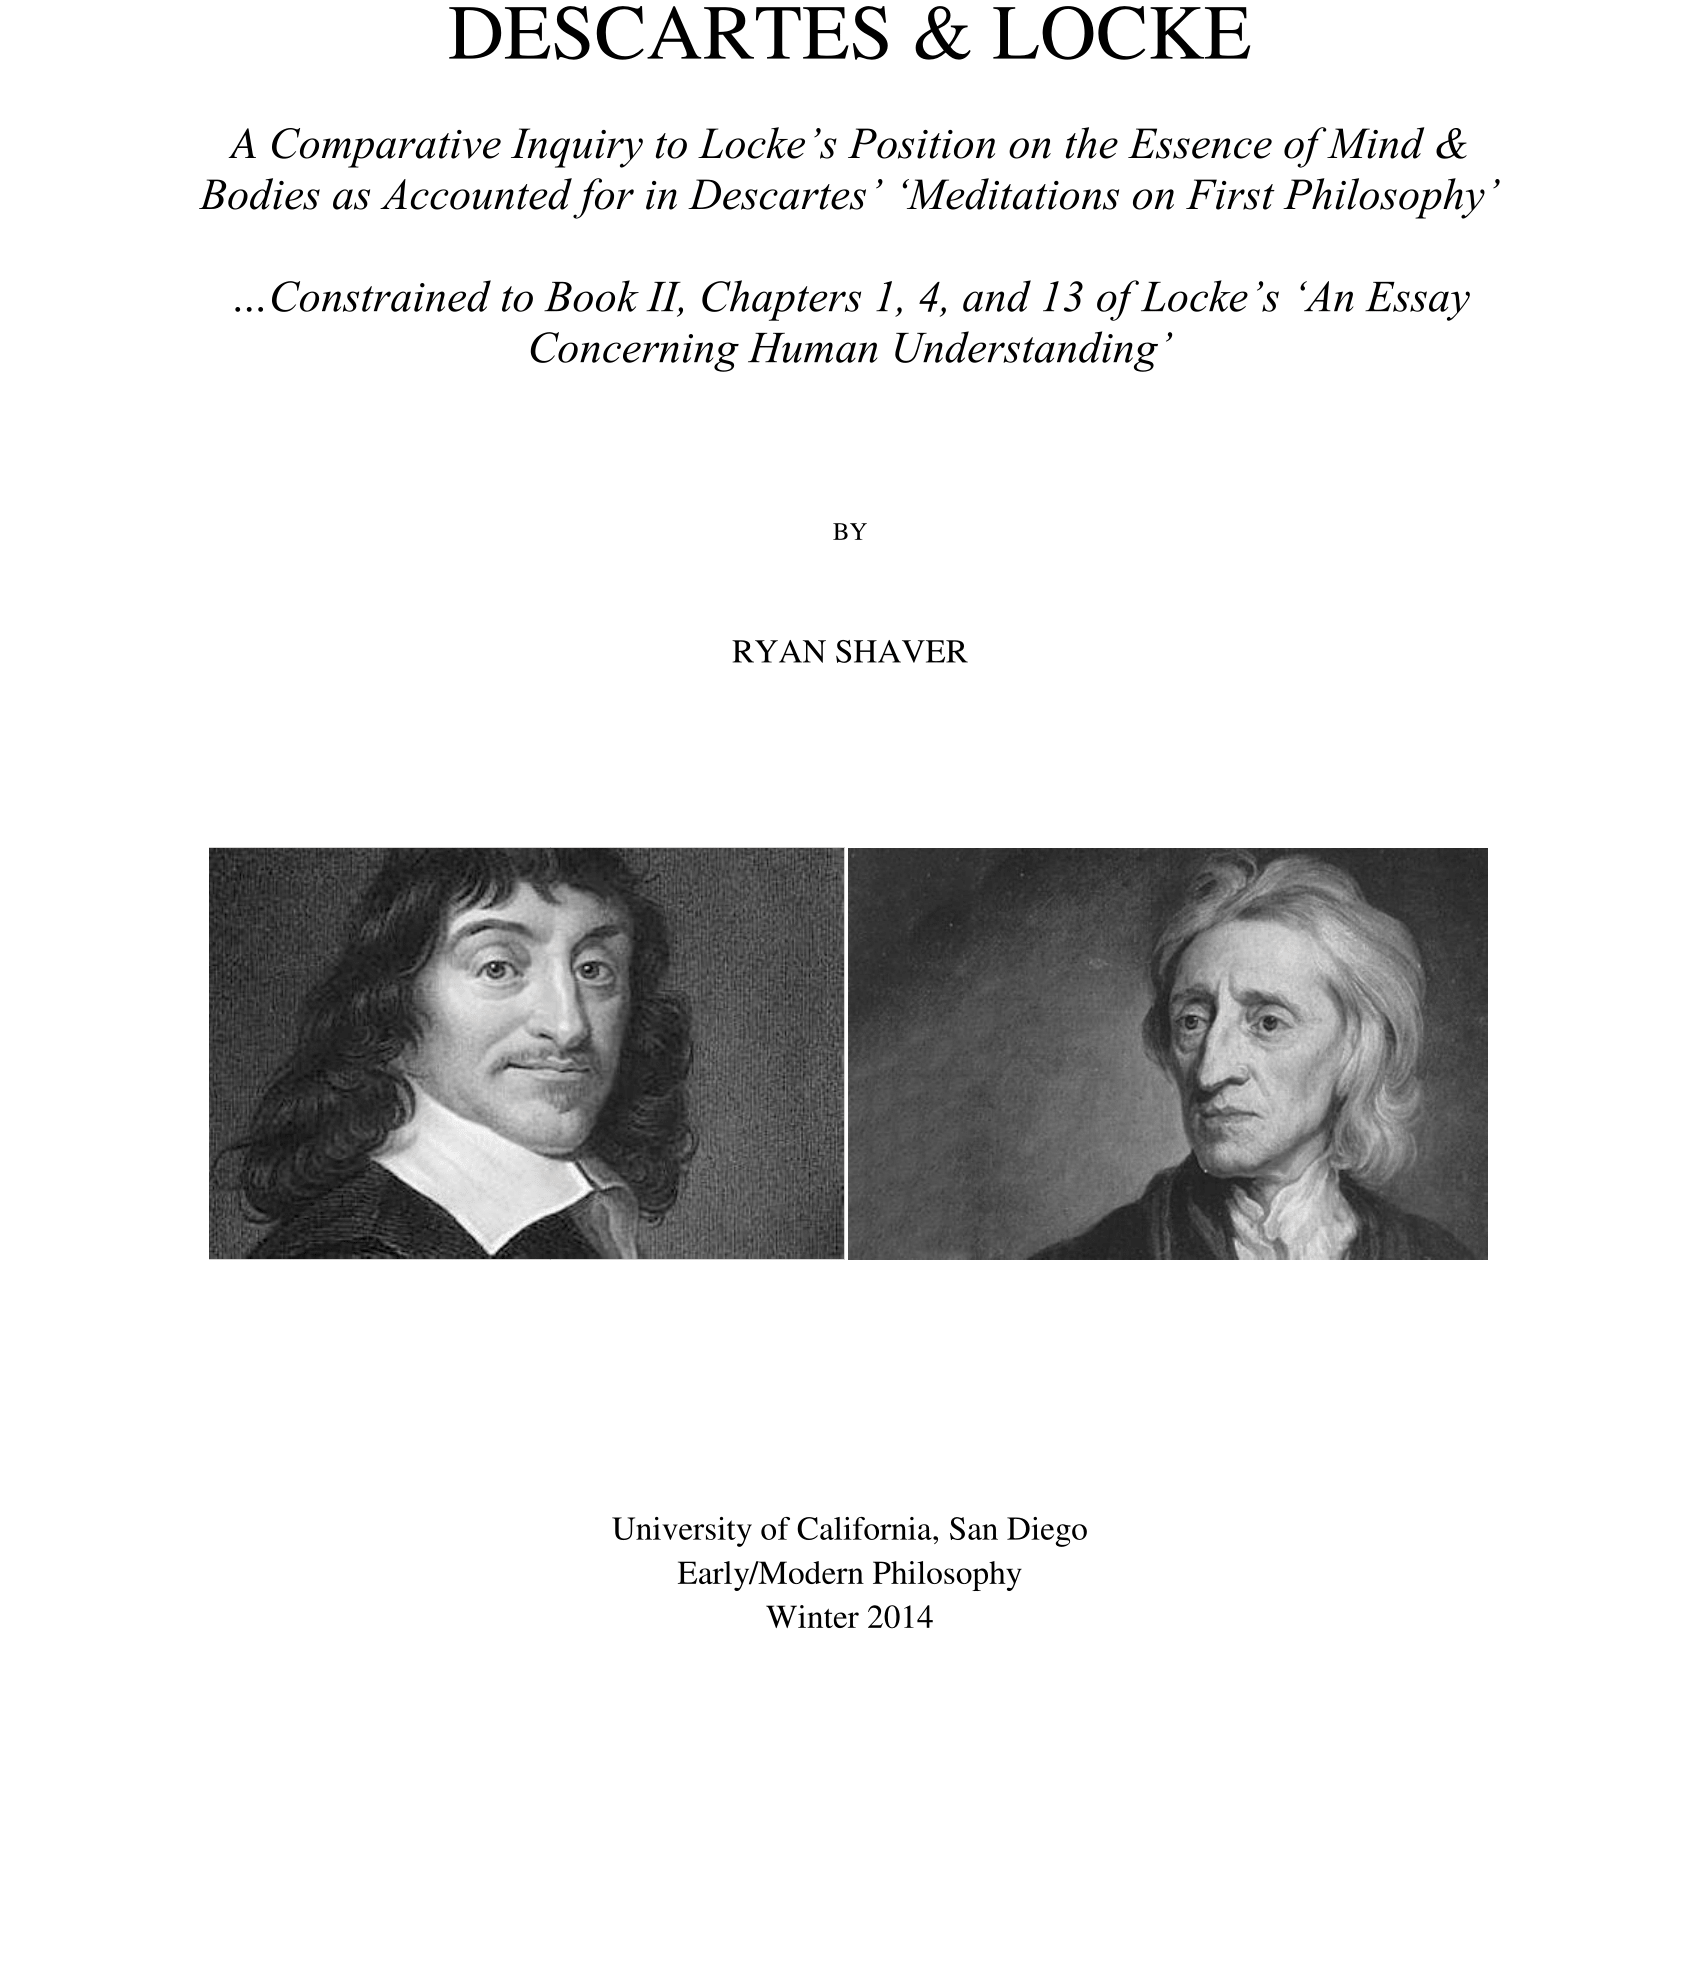 Phil 111 - Descartes & Locke Paper-1.png